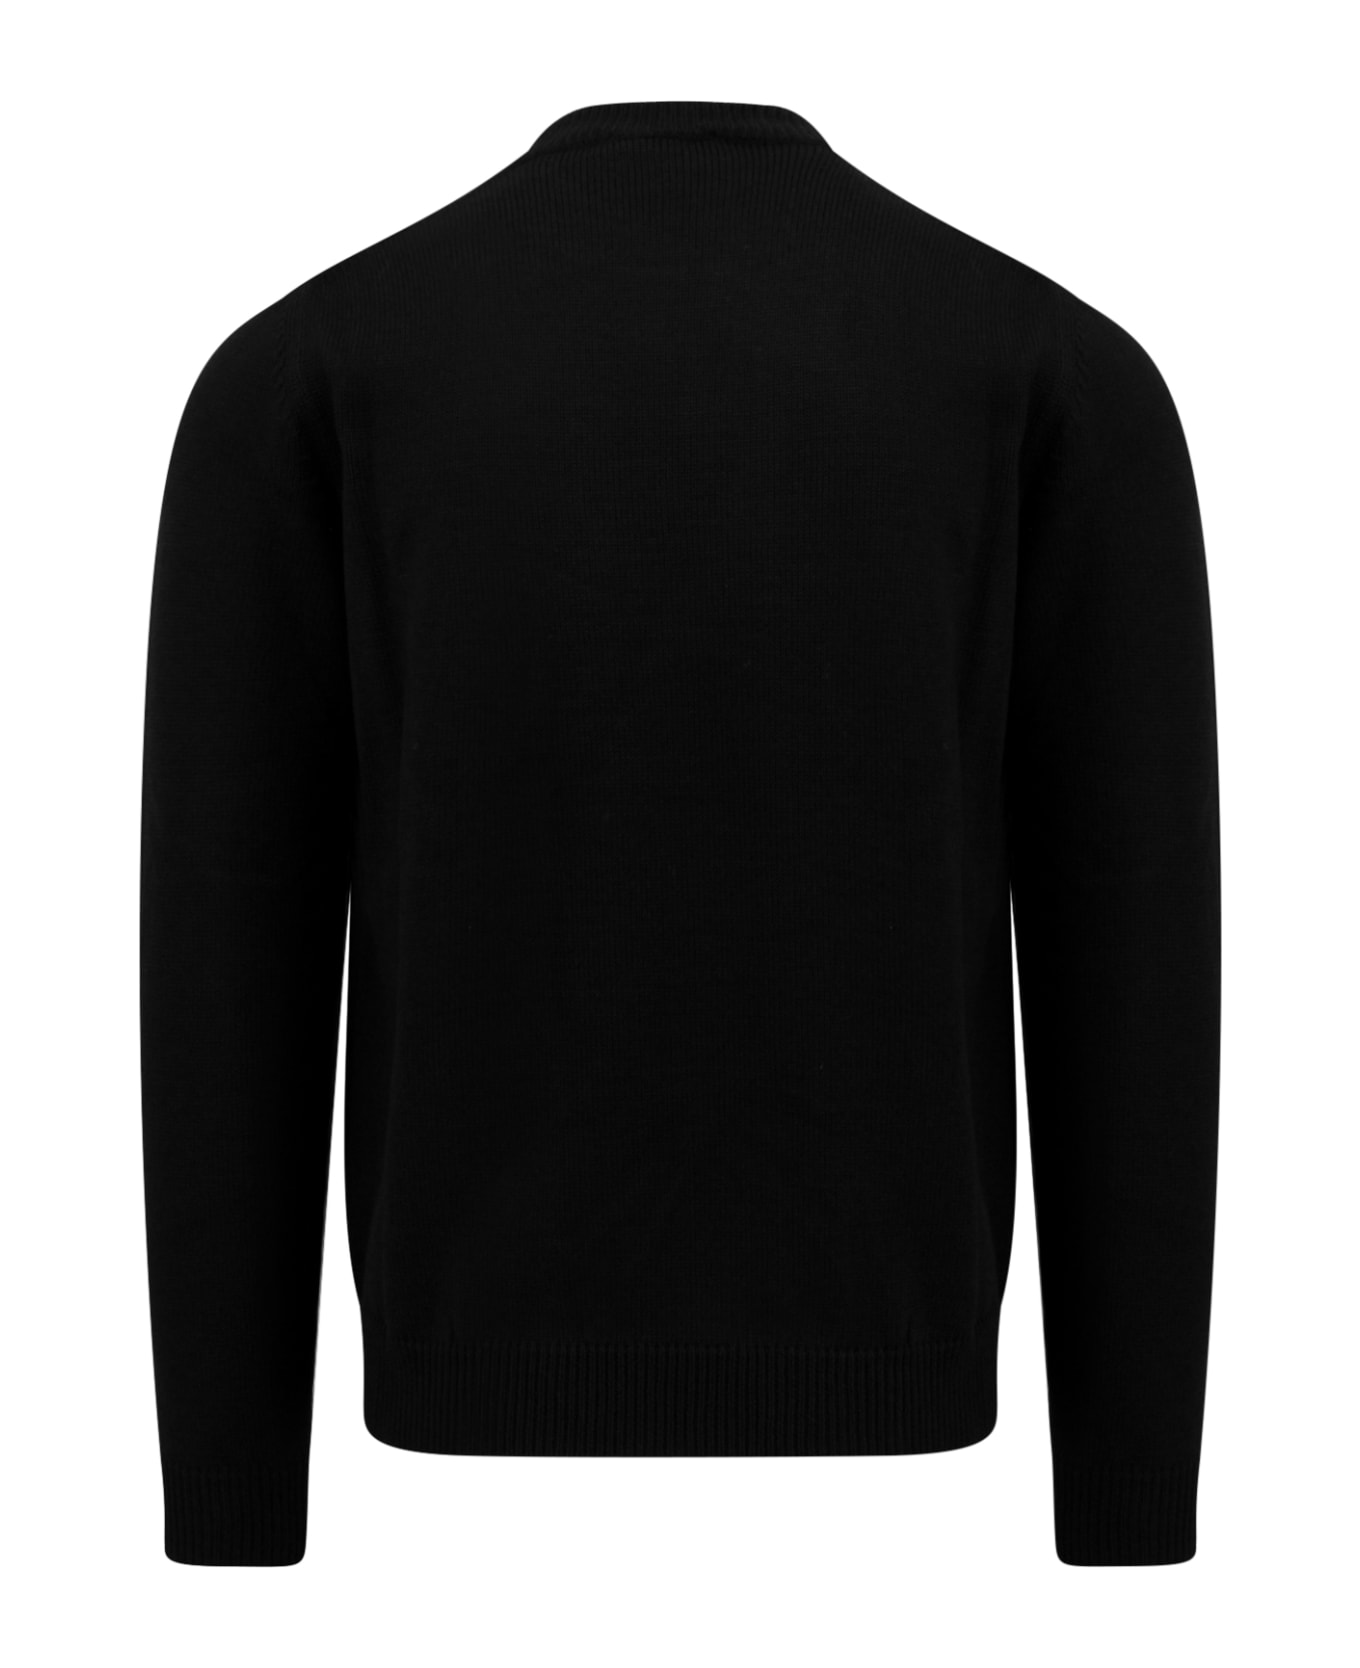 Roberto Collina Sweater - Black